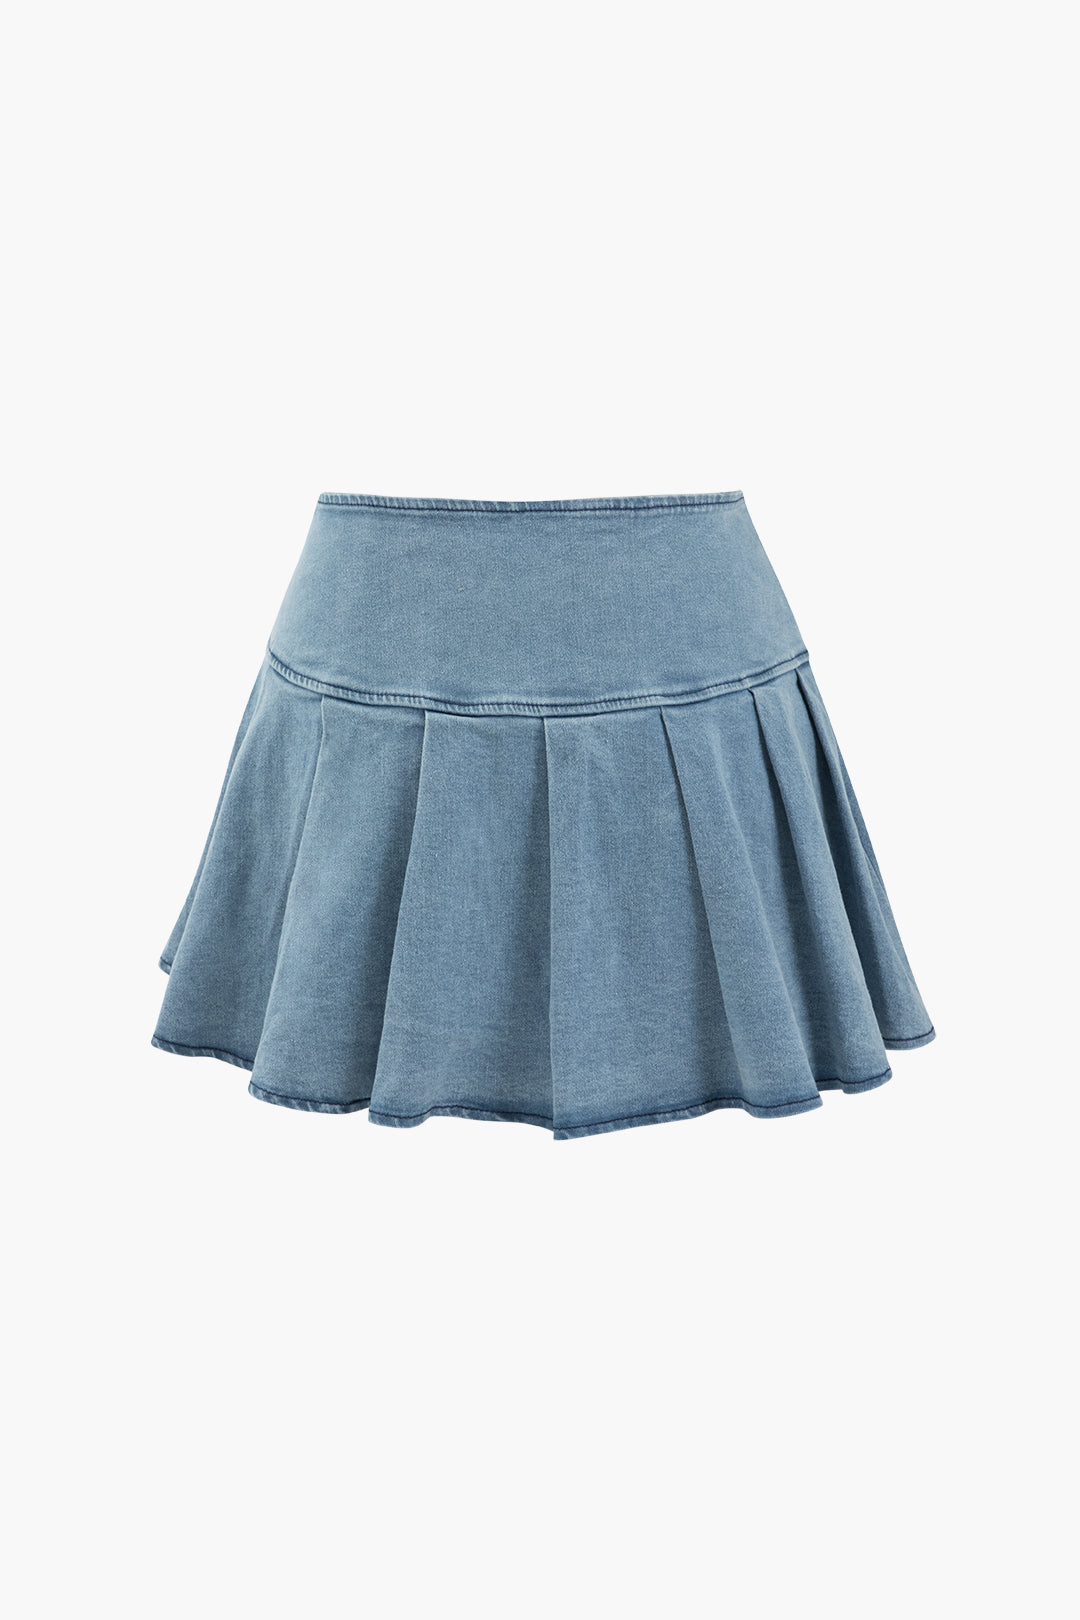 Denim Strapless Top And Pleated Mini Skirt Set